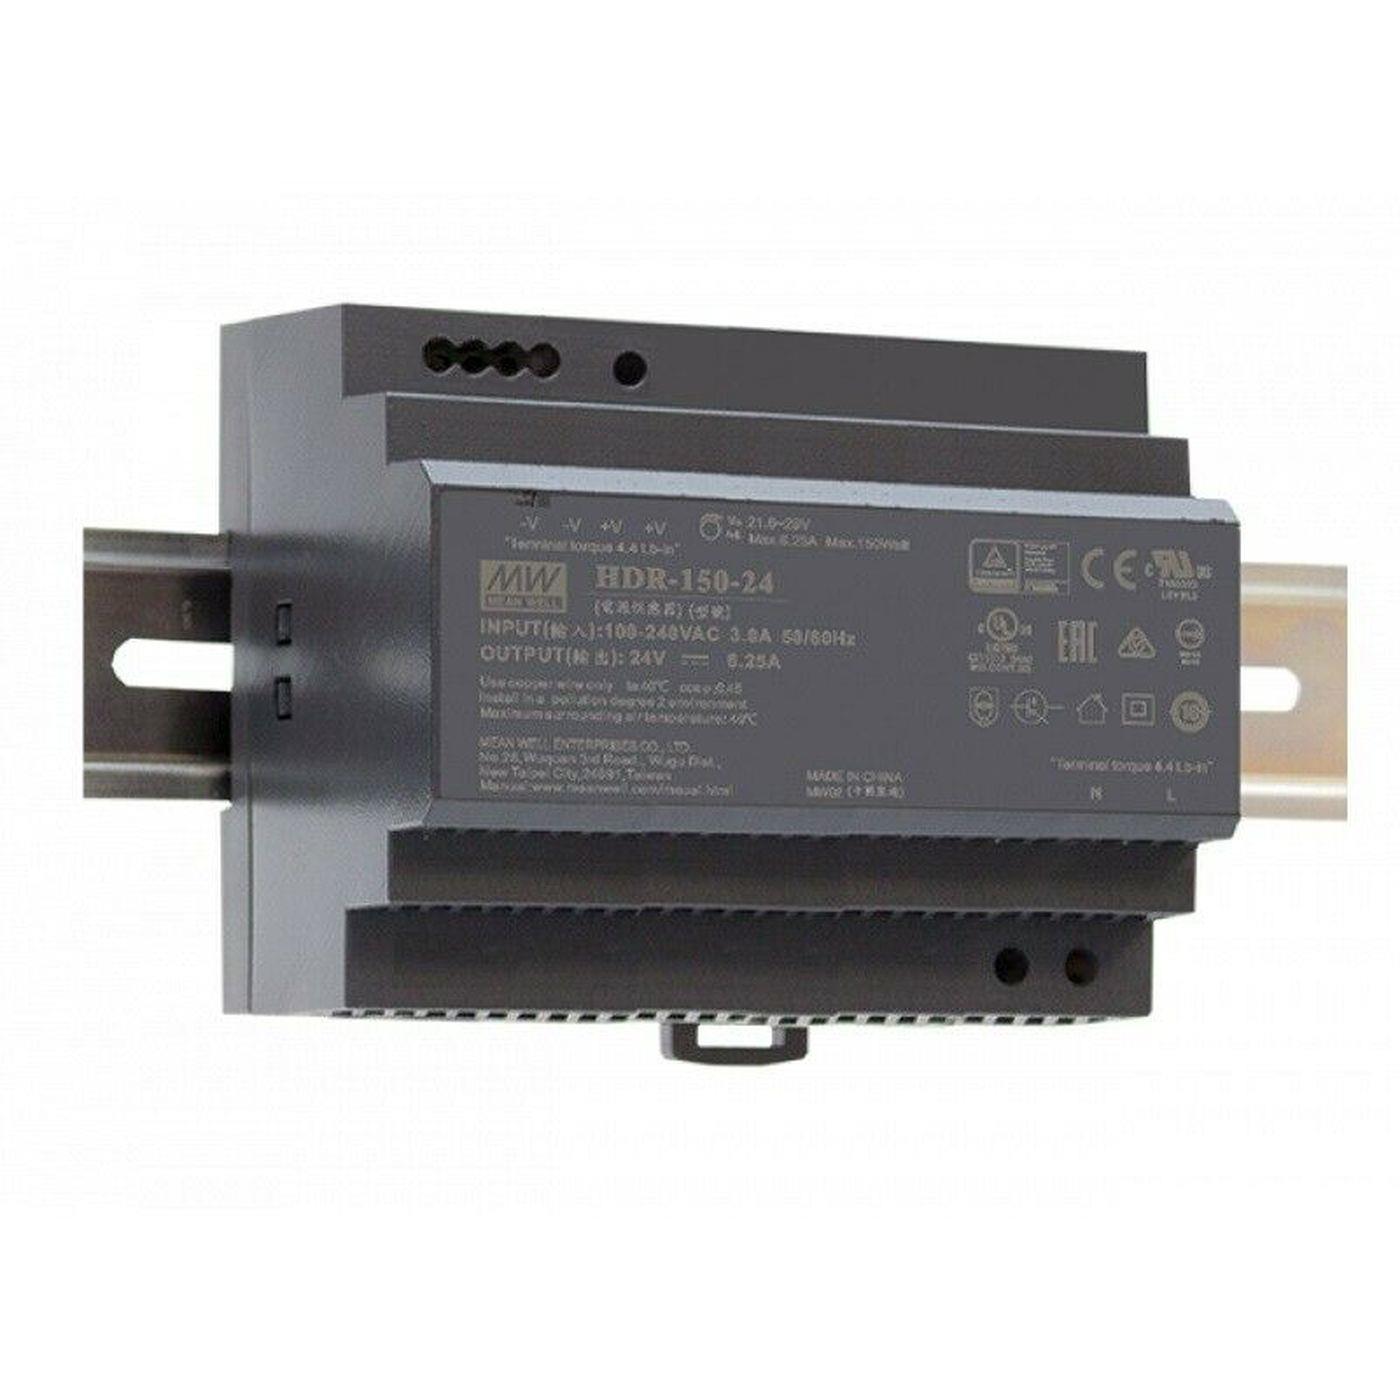 HDR-150-24 150W 24V 6,25A Din Rail power supply